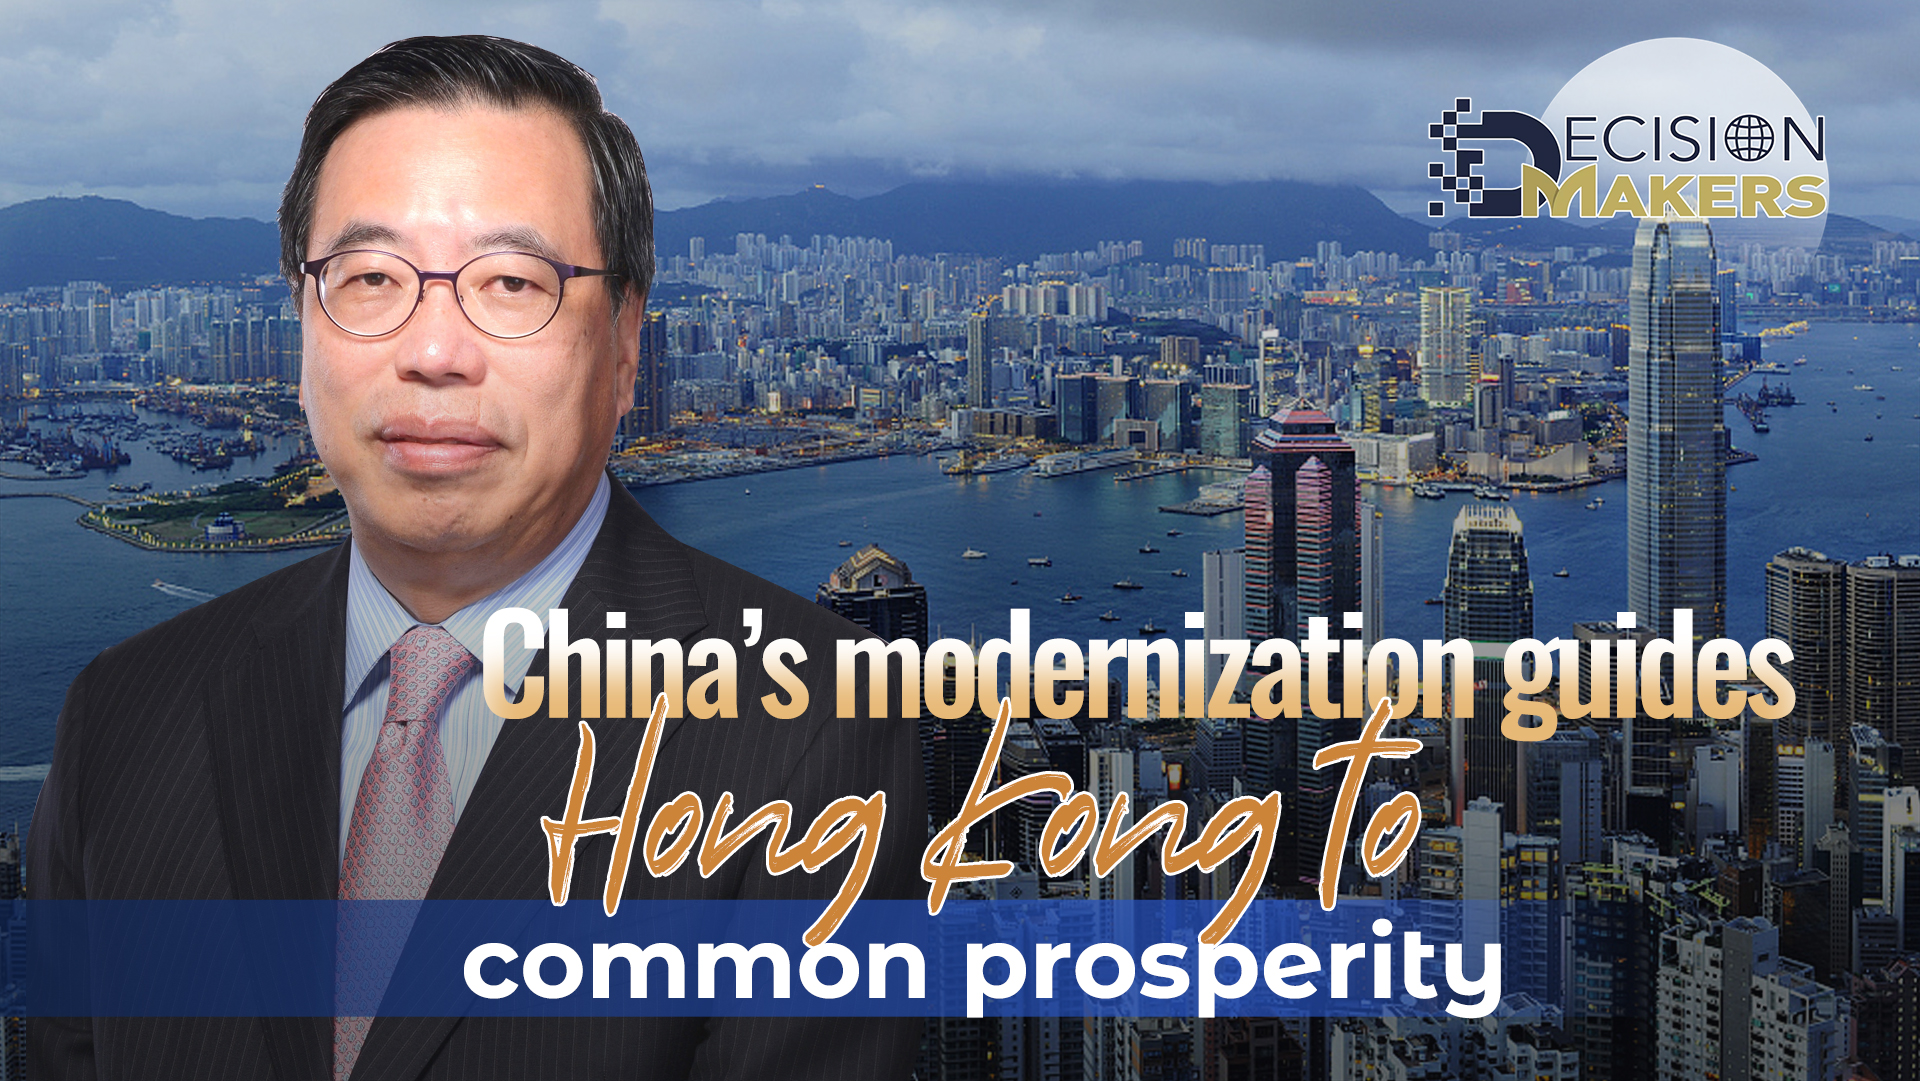 China's modernization guides Hong Kong to common prosperity